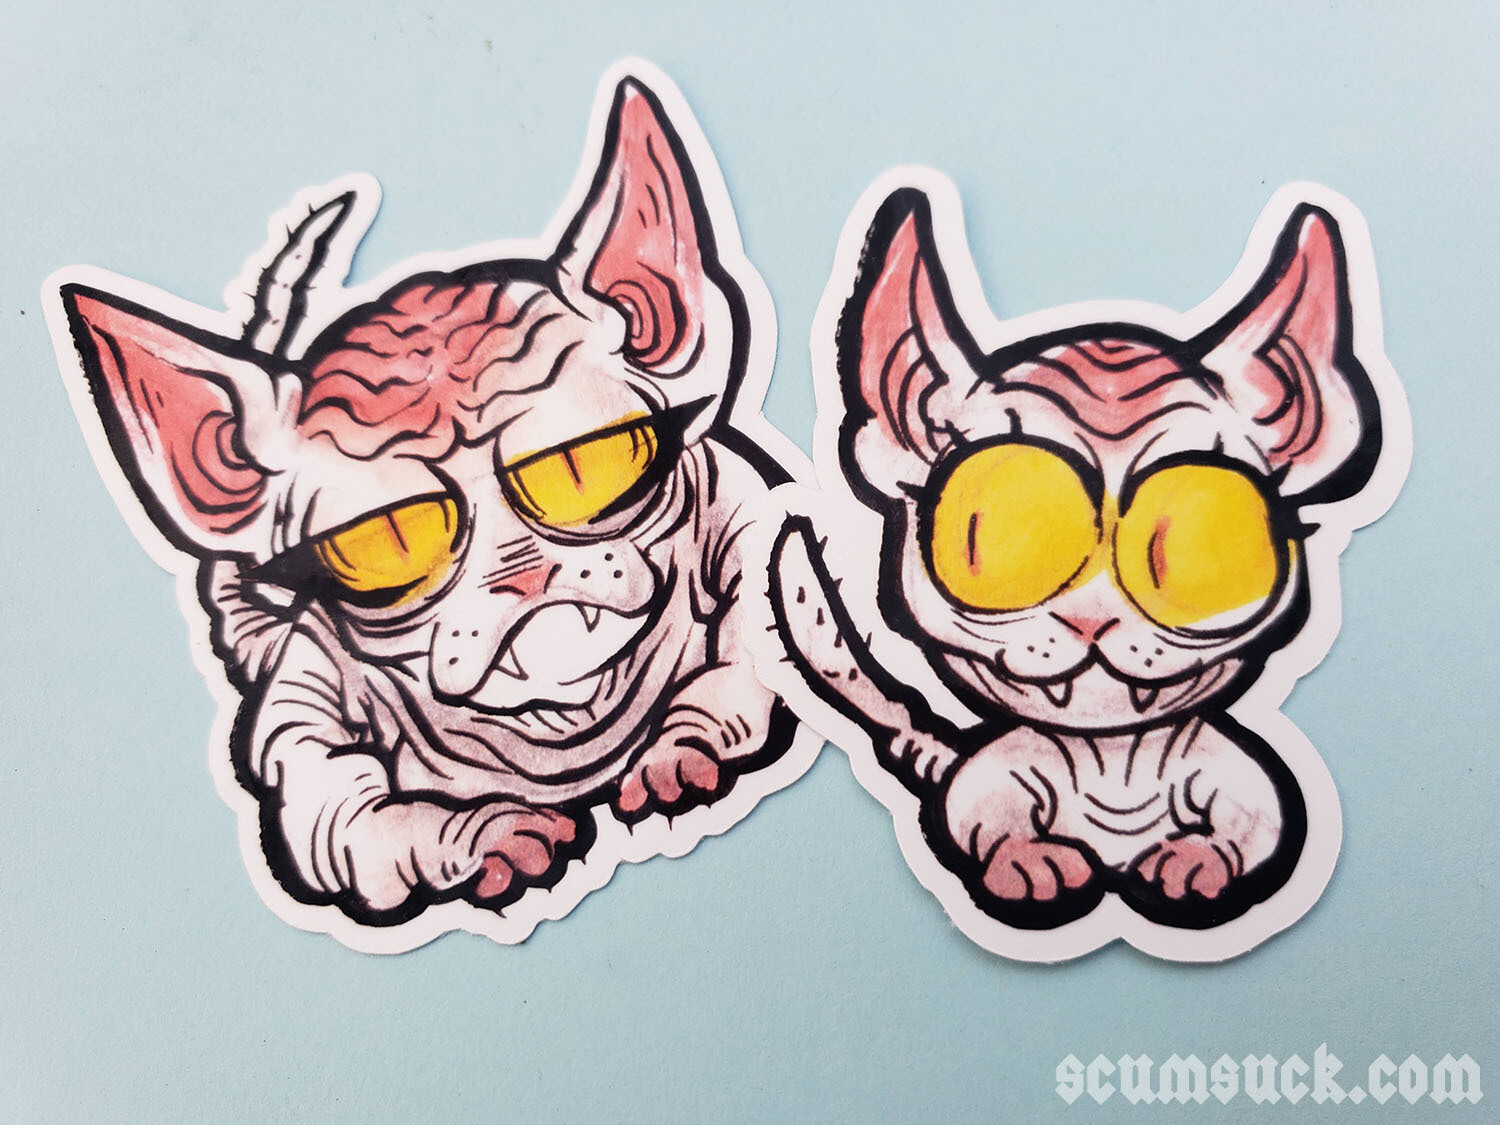 Sphynx Cat sticker set